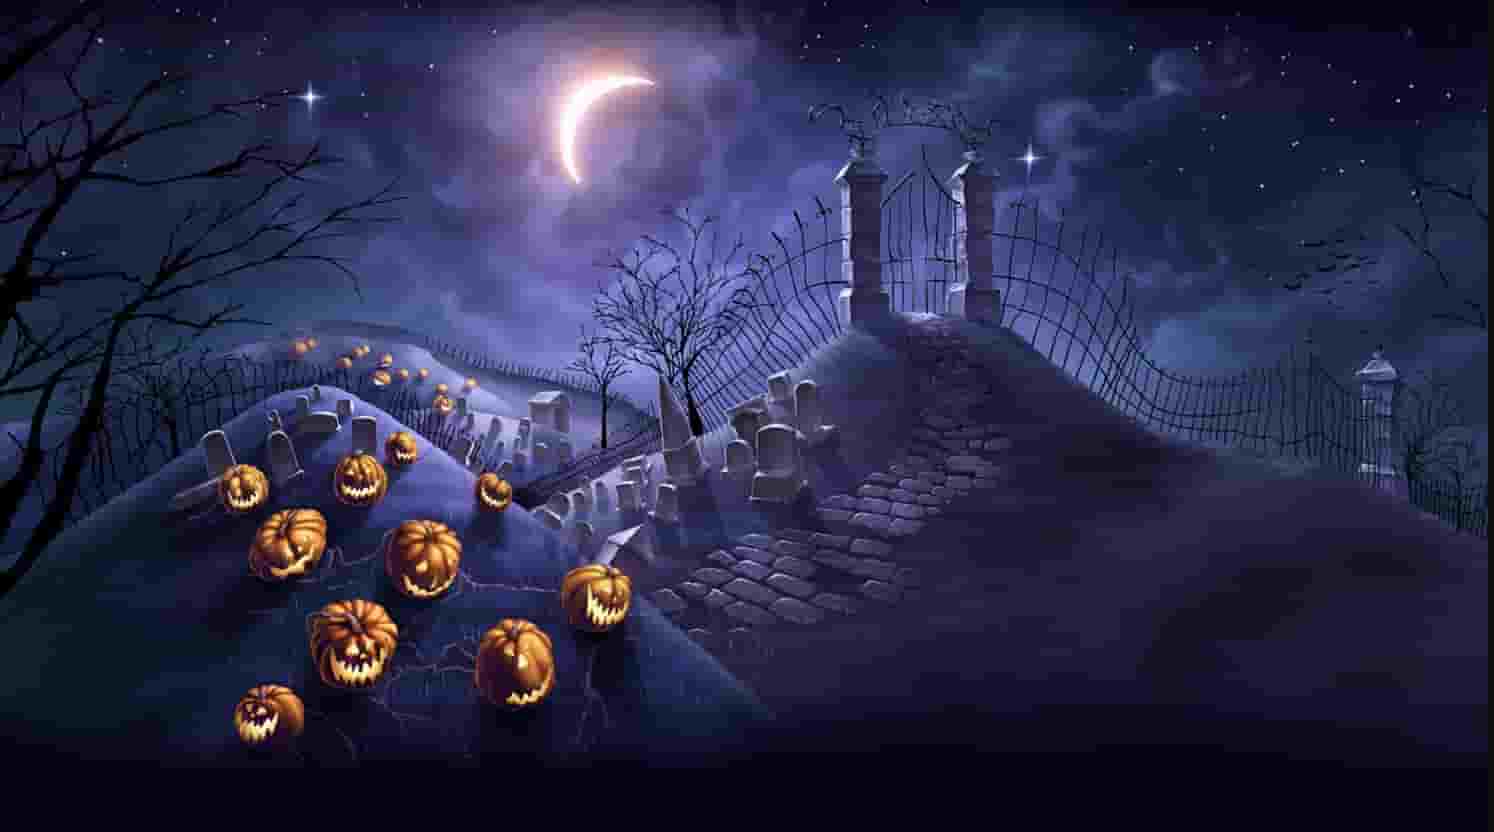 Halloween Horror Theme for Windows 10 Free Download 2020 - SecuredYou